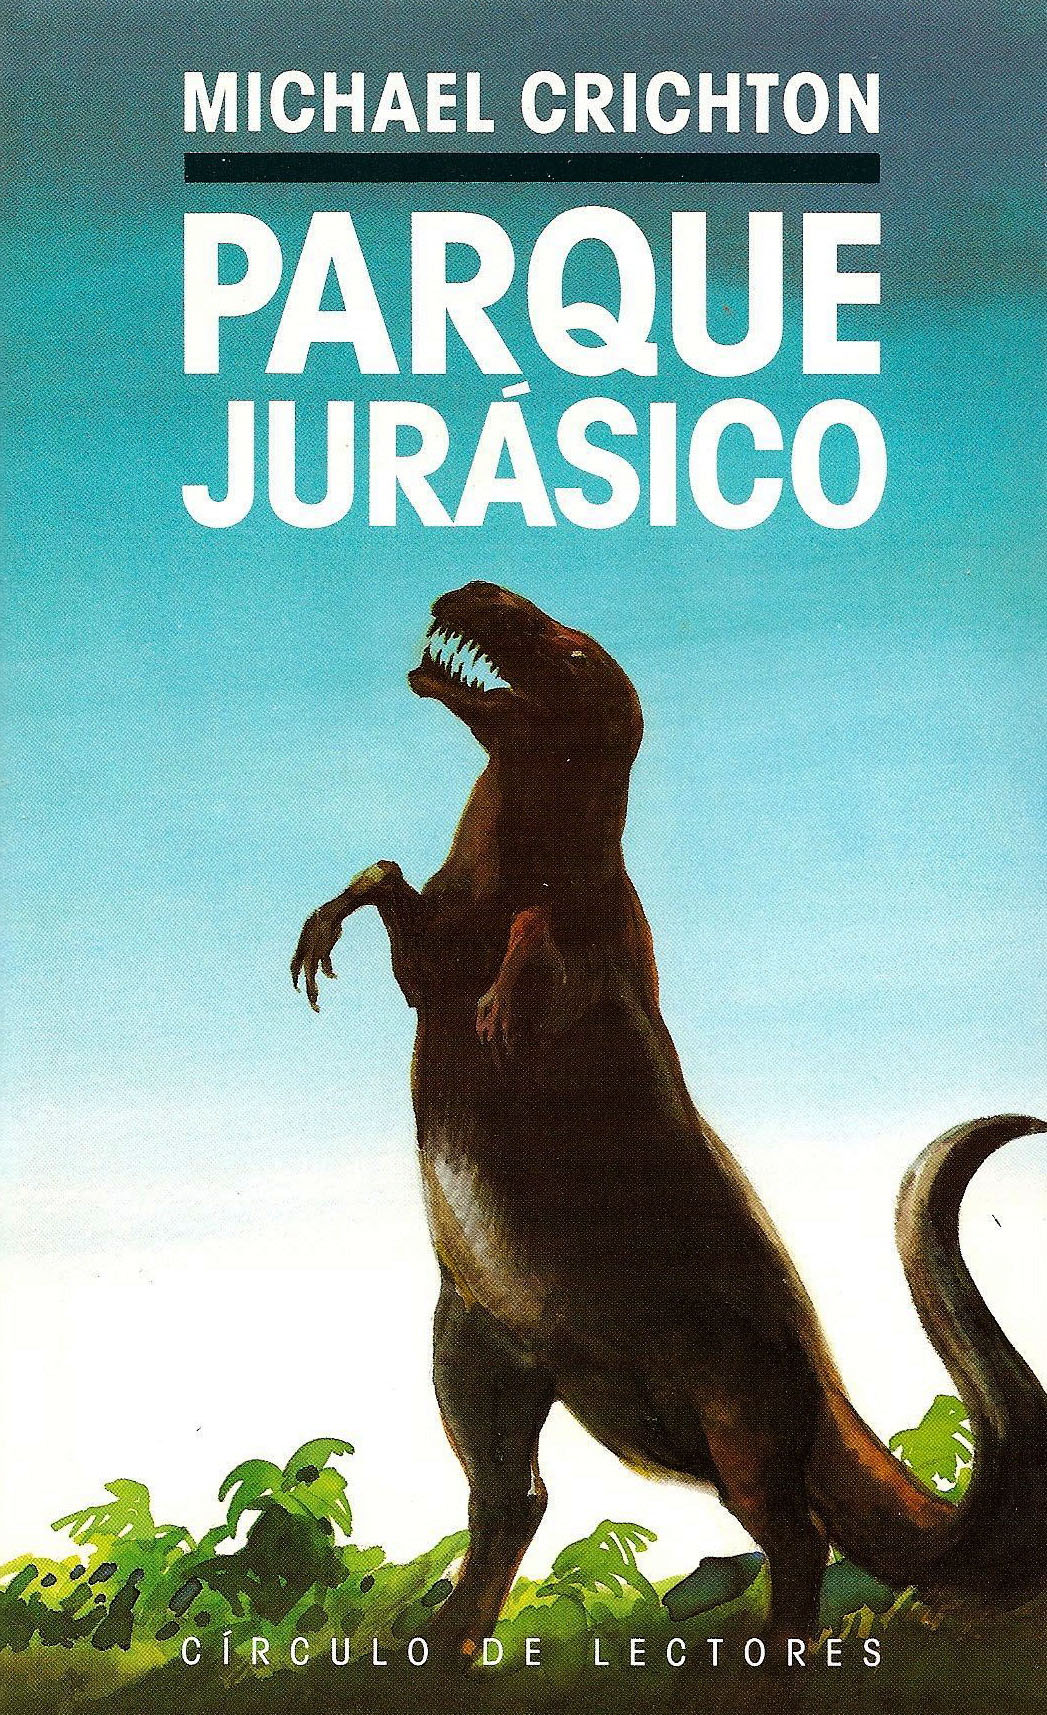 Jurassic Park
Spain – 1992